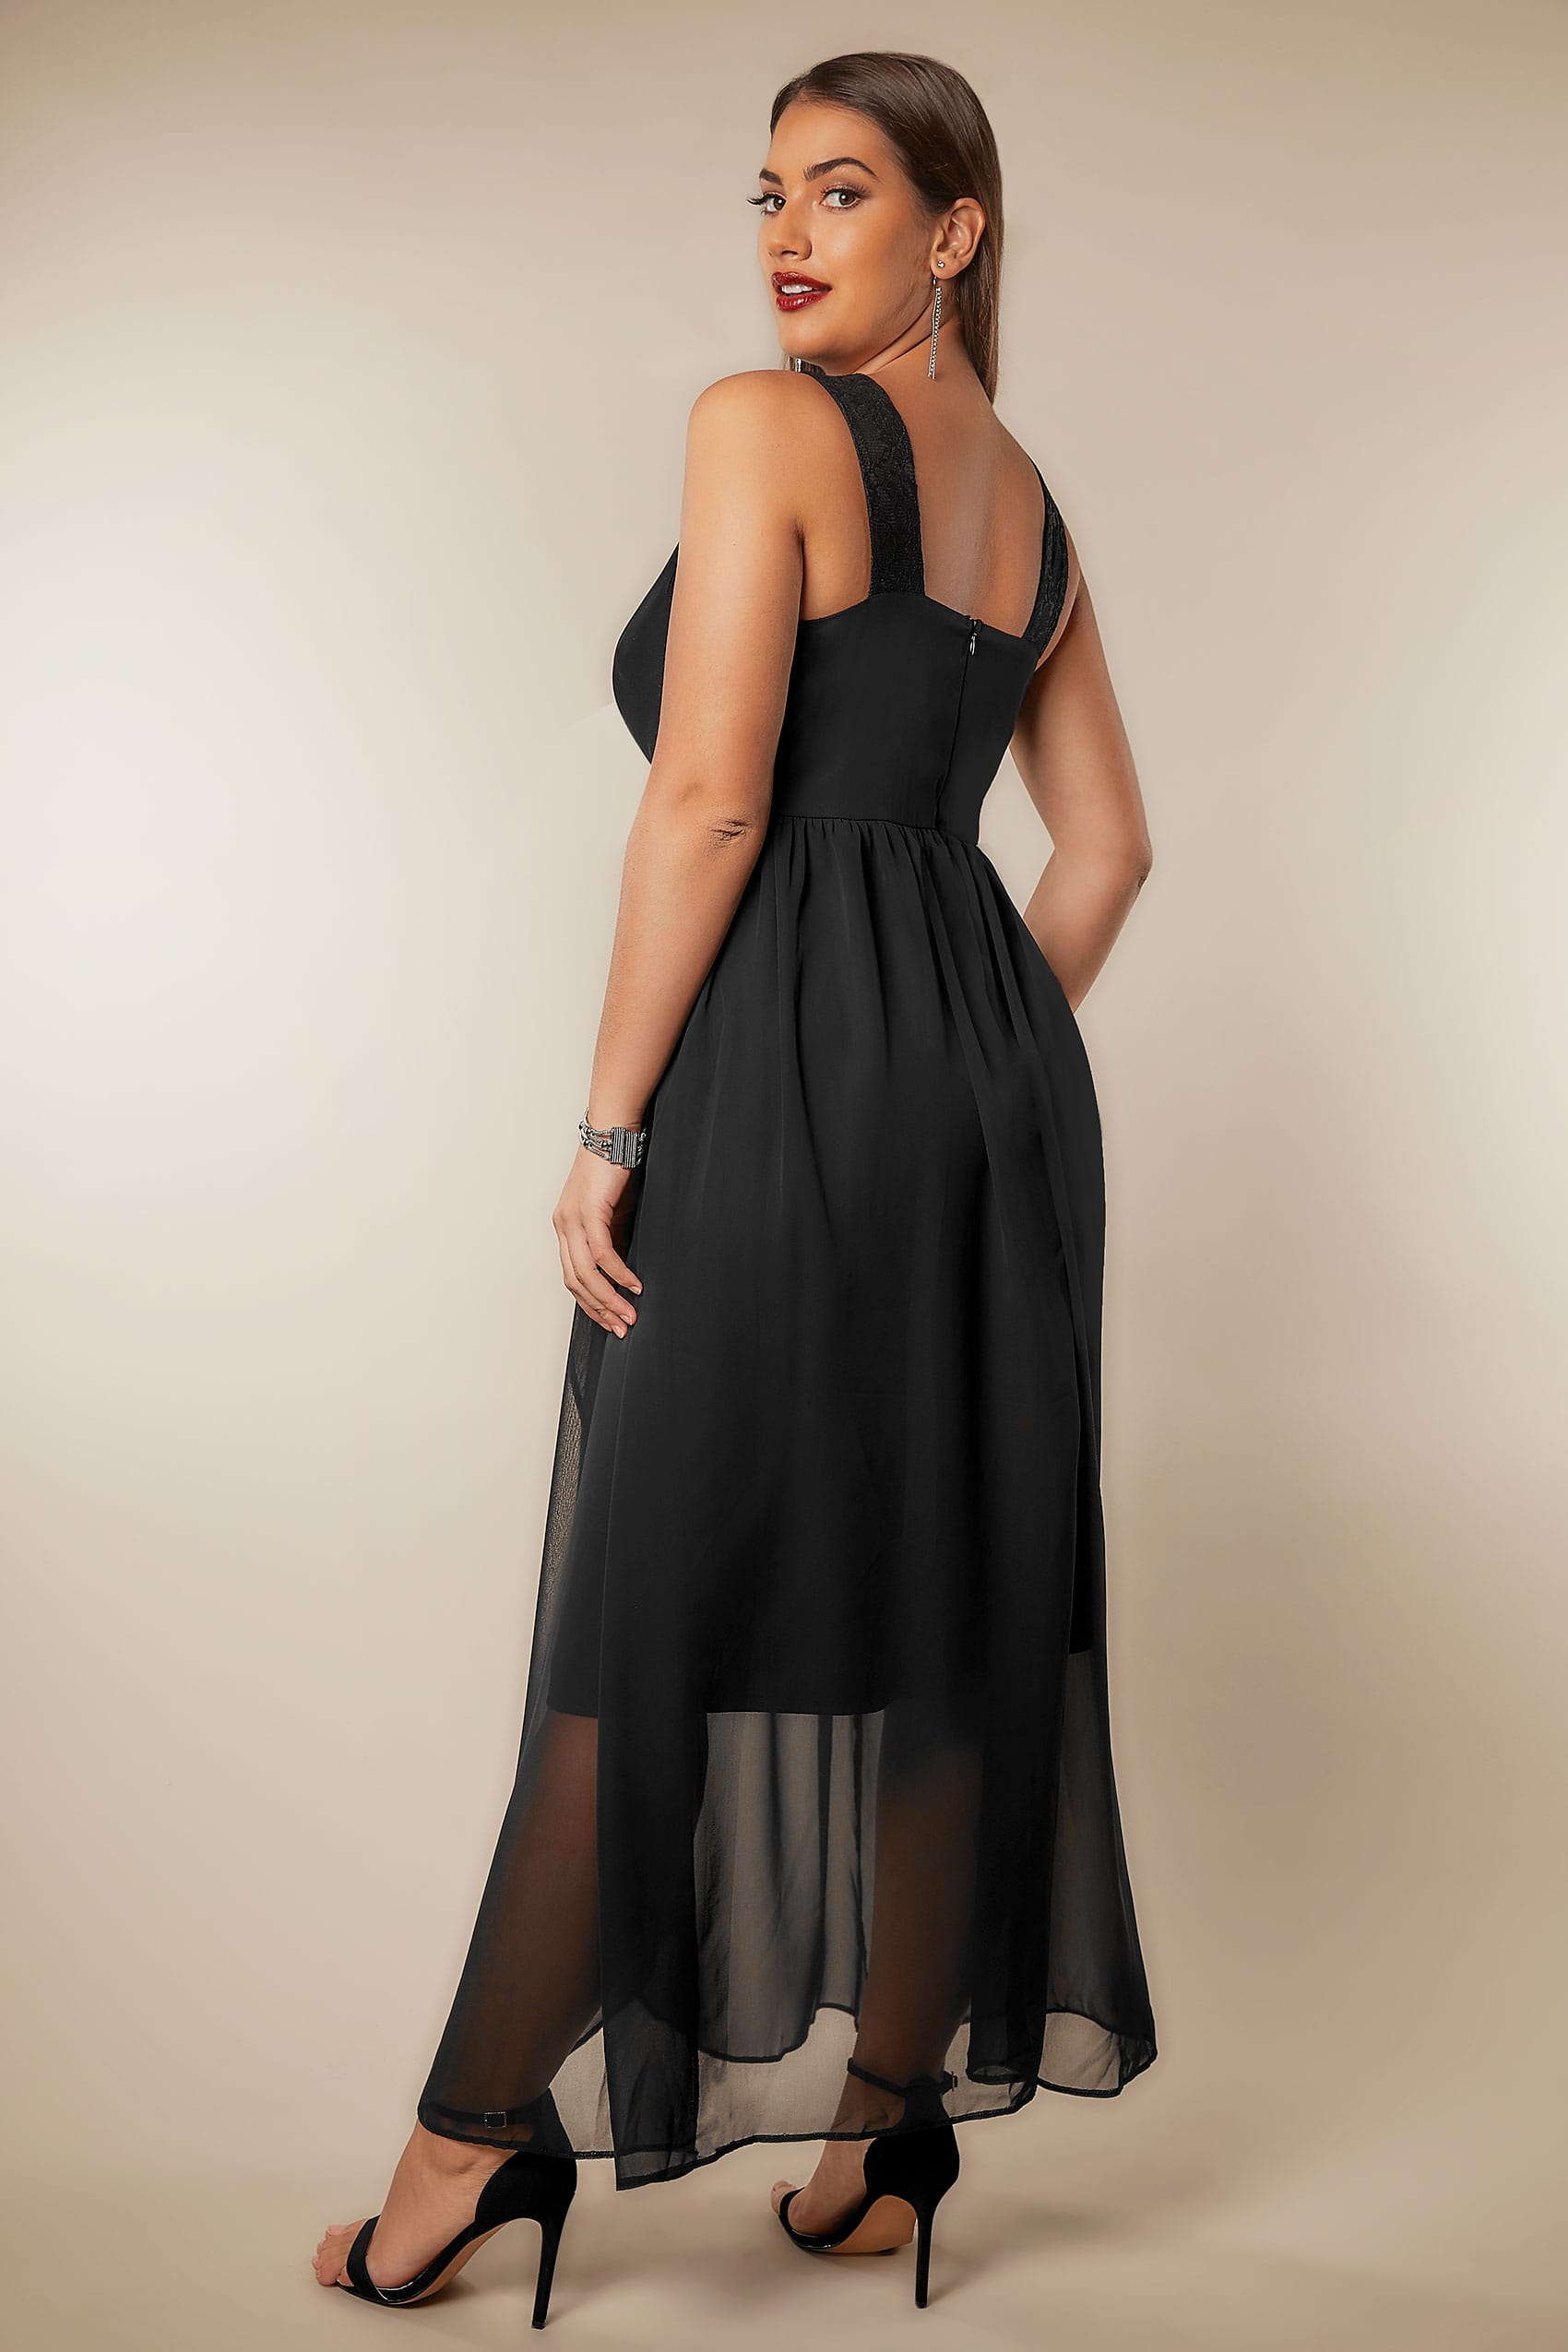 Black Chiffon Maxi Dress With Wrap Front & Lace Details Plus size 16 to 36